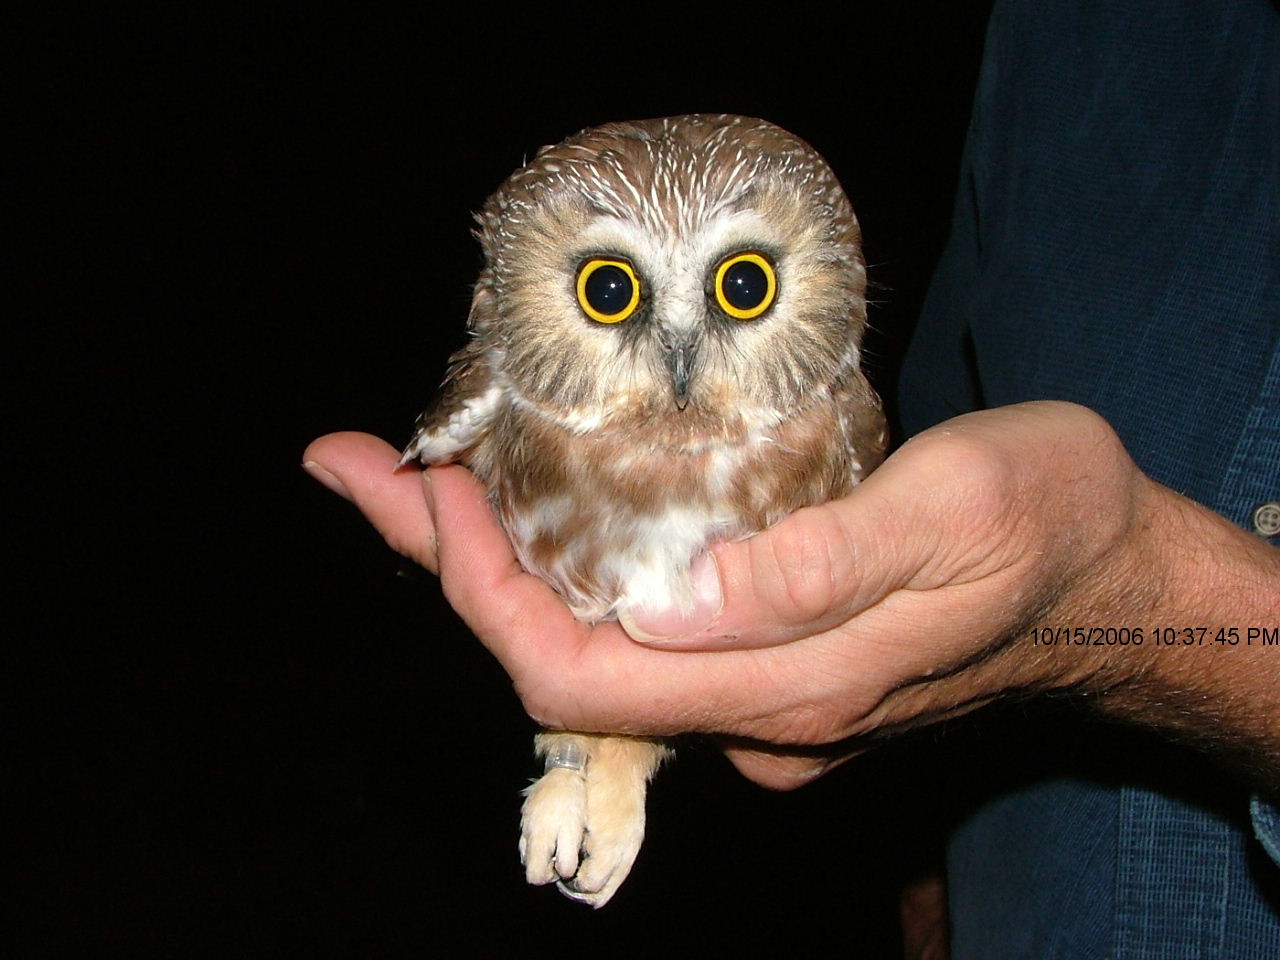 Pretty Northern saw-whet owl